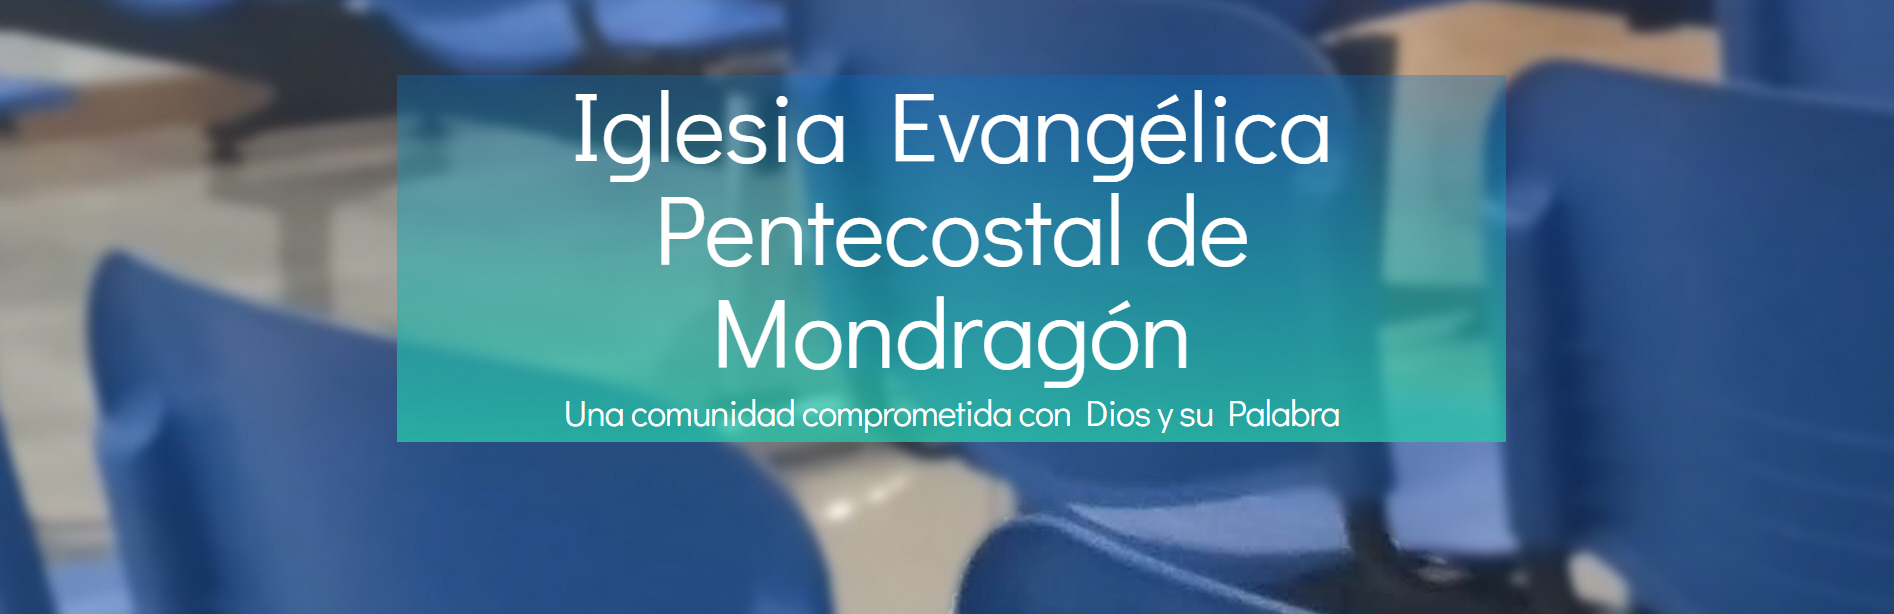 Iglesia Evangelica Pentecostal de Arrasate - Mondragón